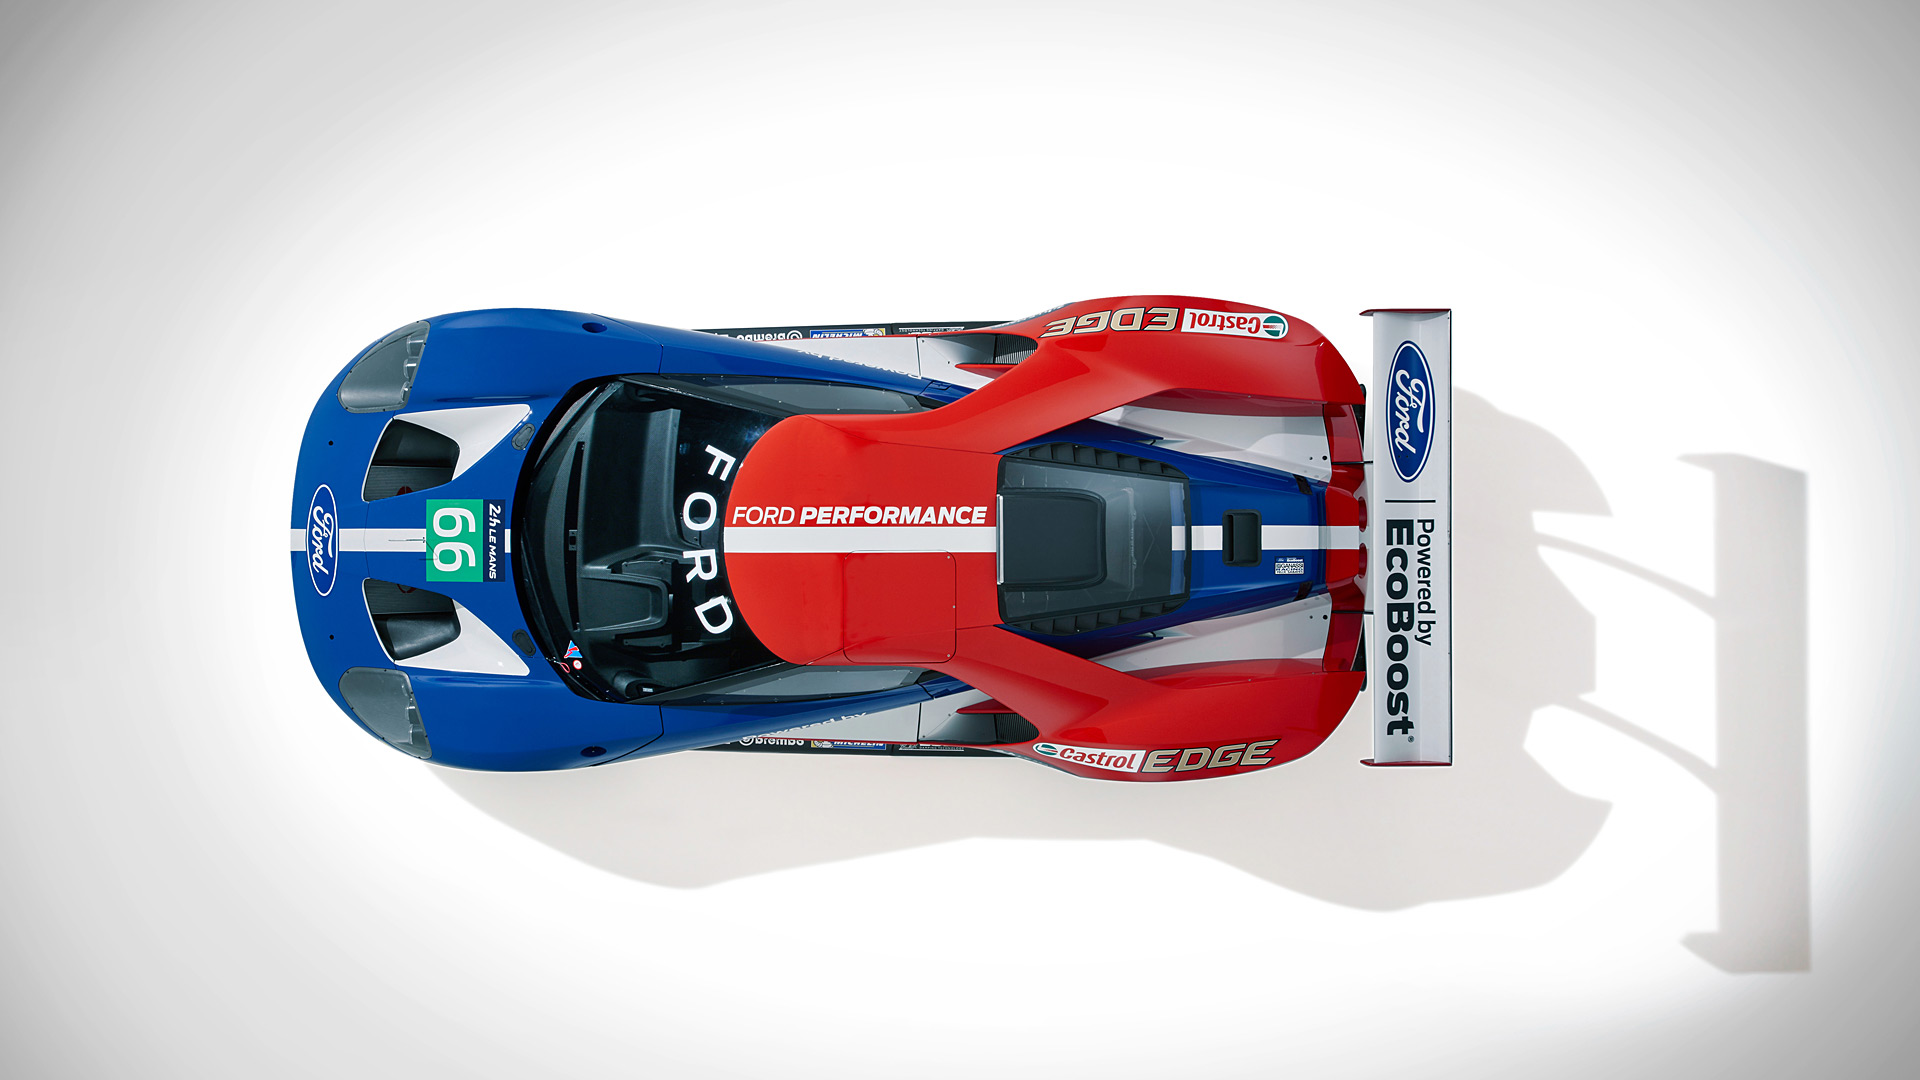  2016 Ford GT Le Mans Racecar Wallpaper.